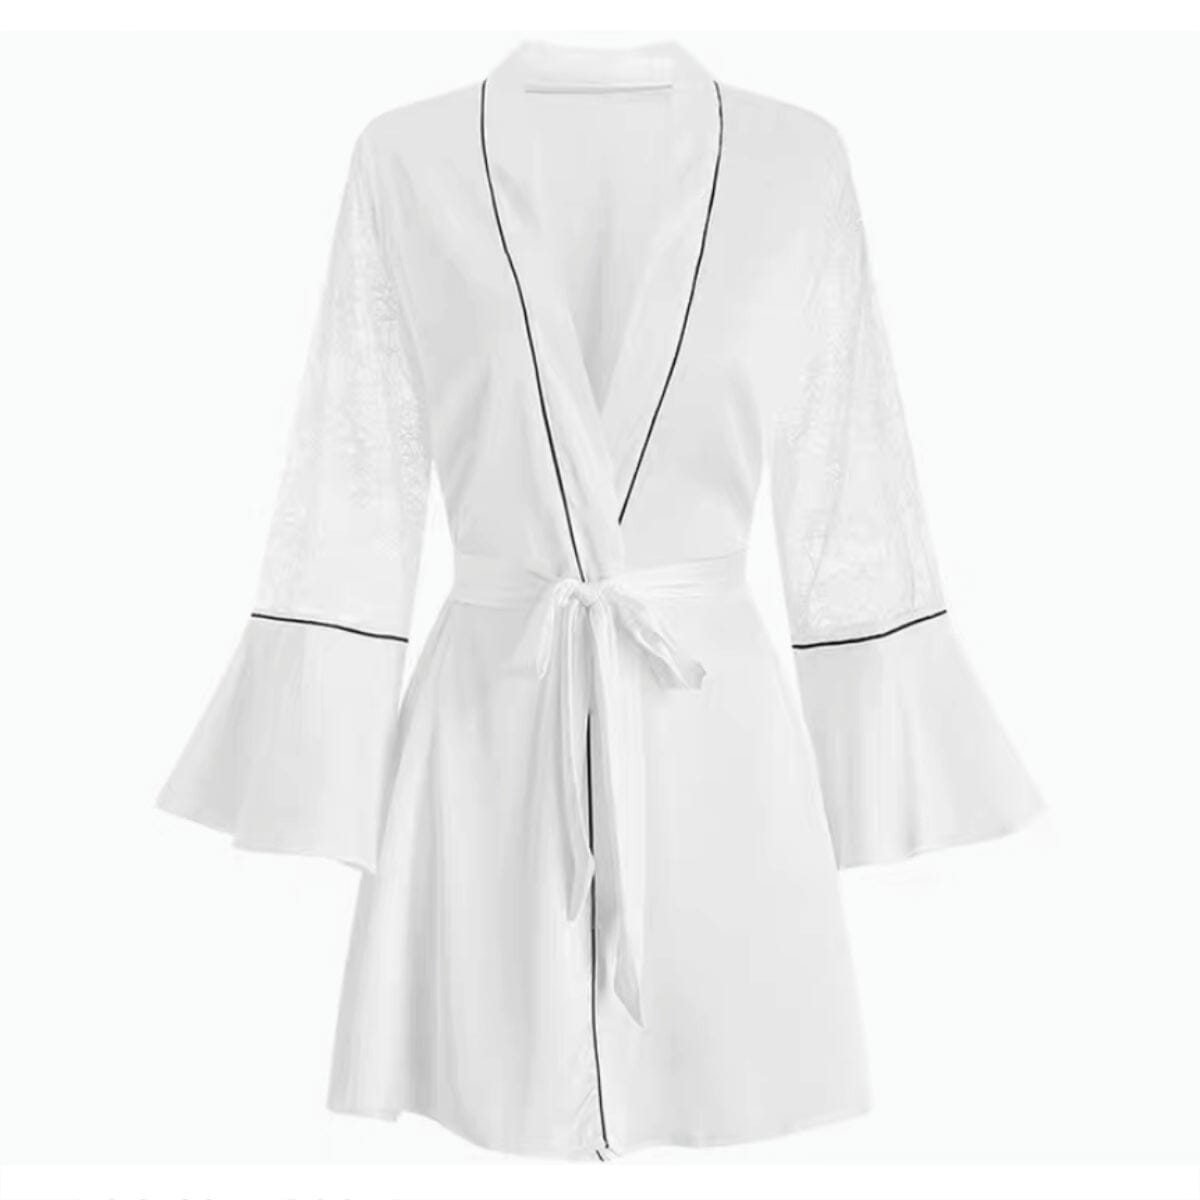 Romina lace and satin robe Intimates LOVEFREYA Free size White 